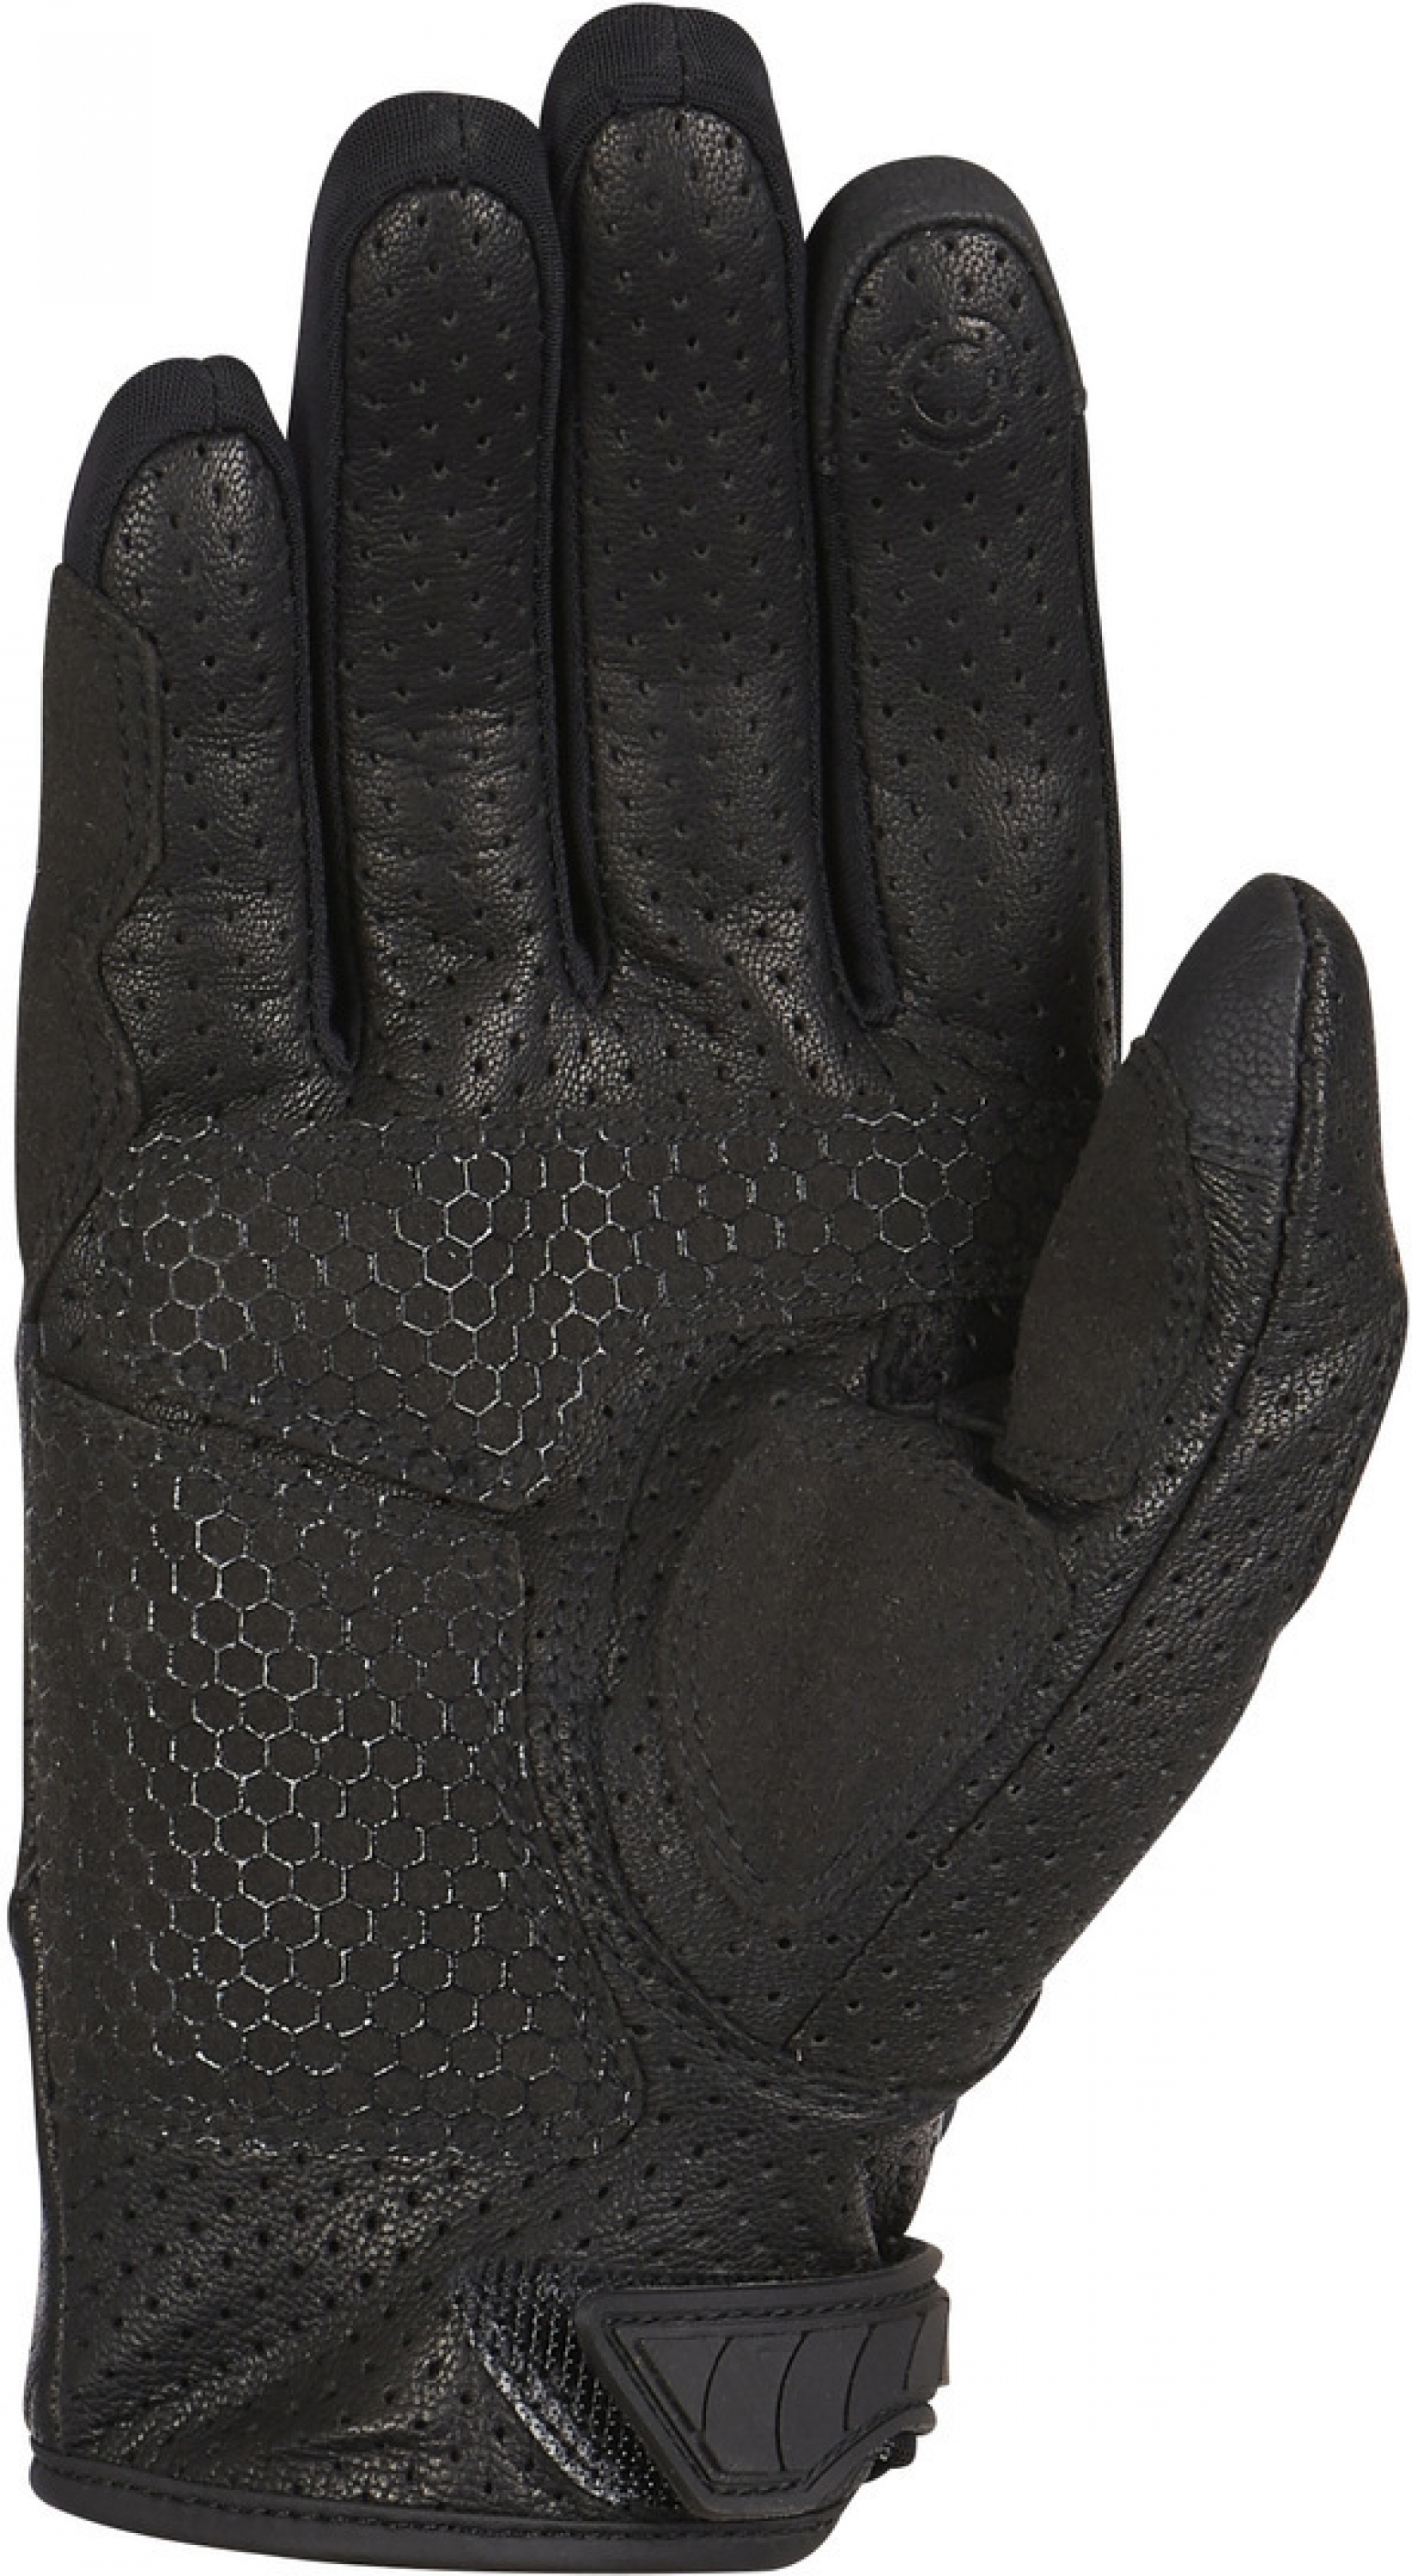 Furygan "TD21 Vented" Handschuhe